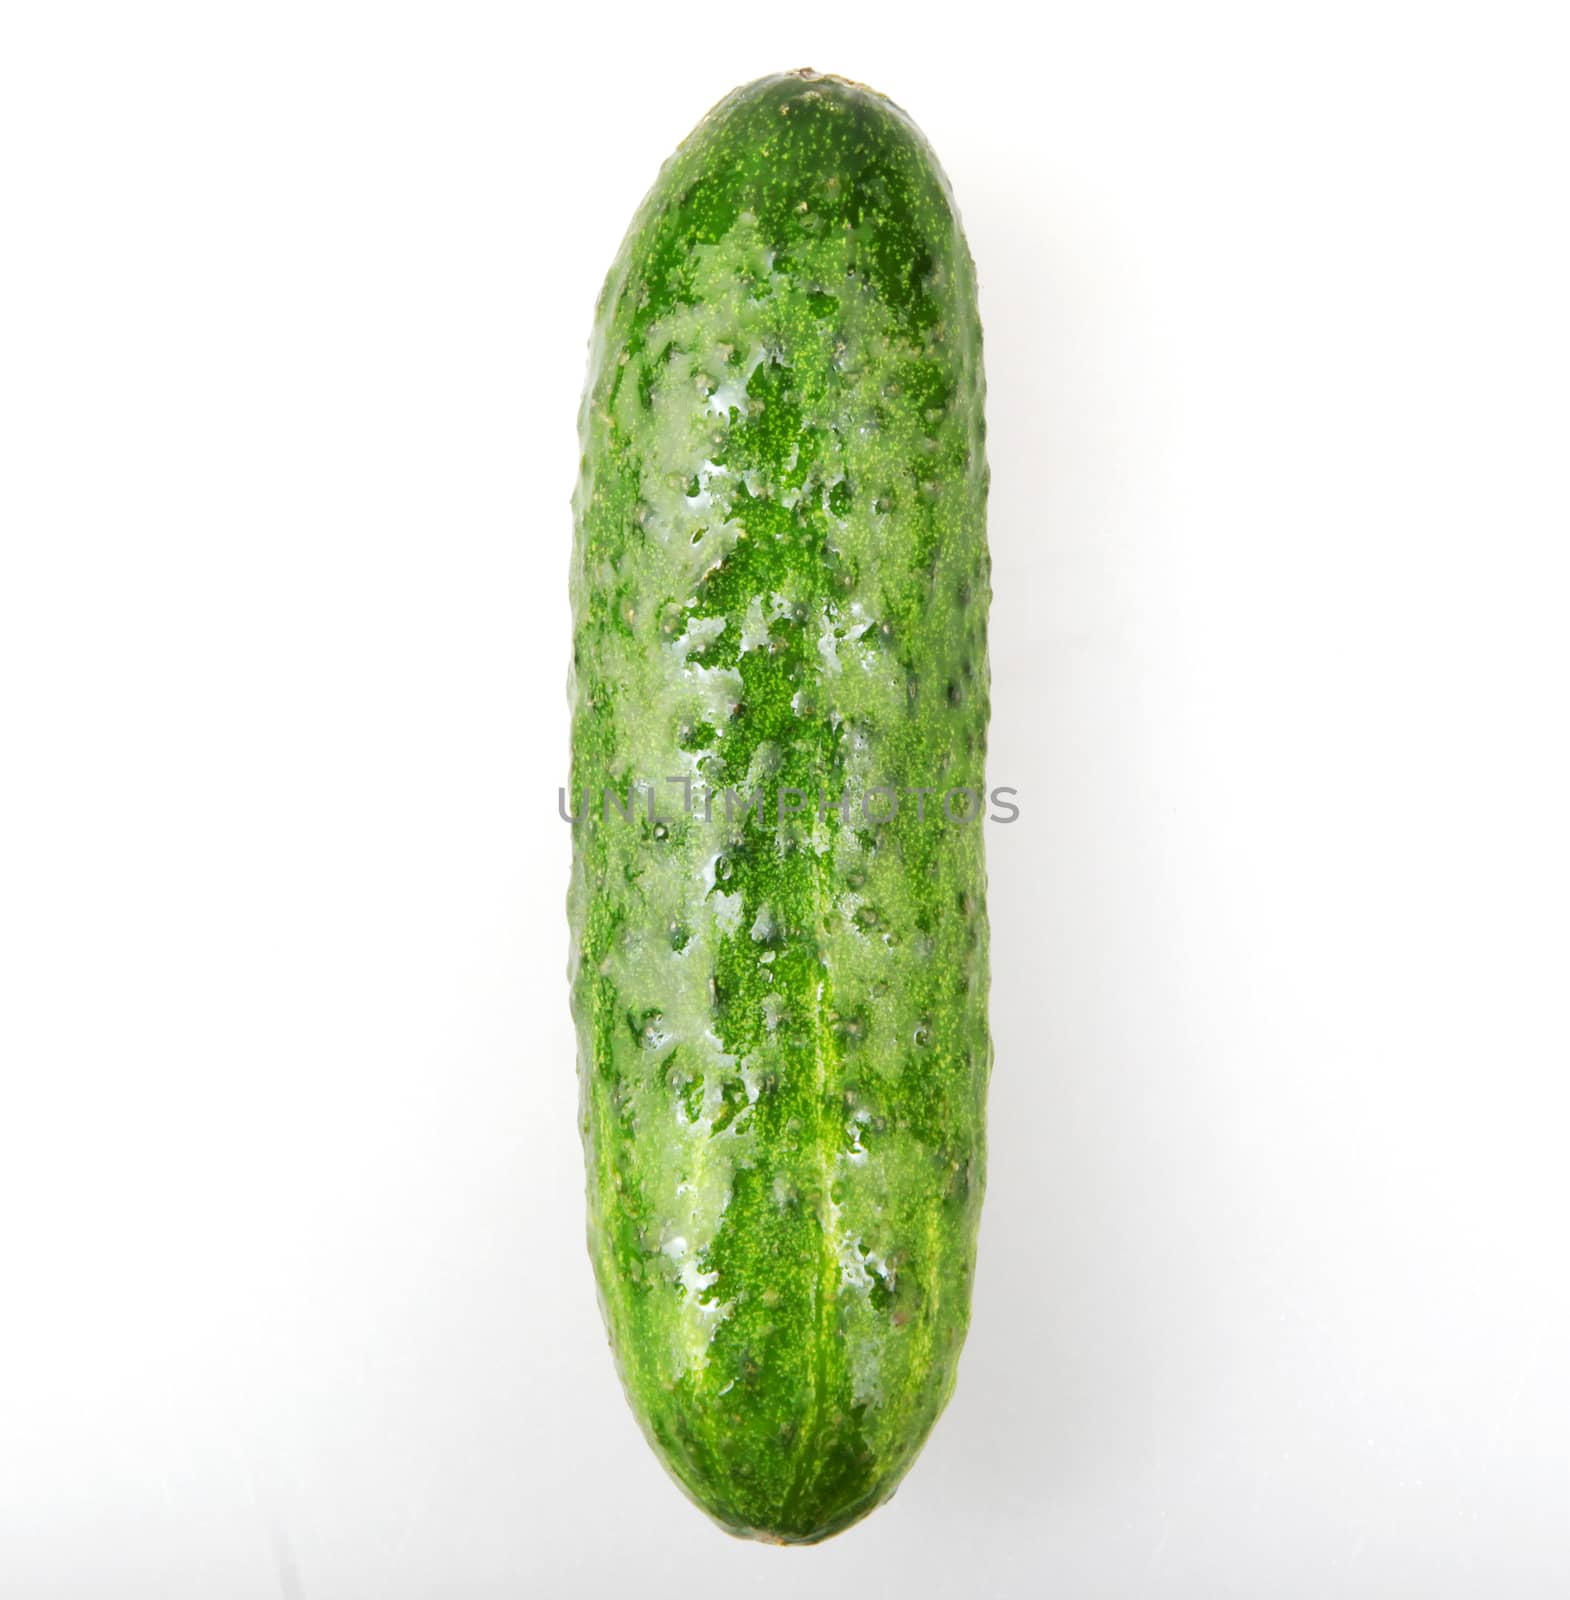 Fresh Cucumber Against White Background